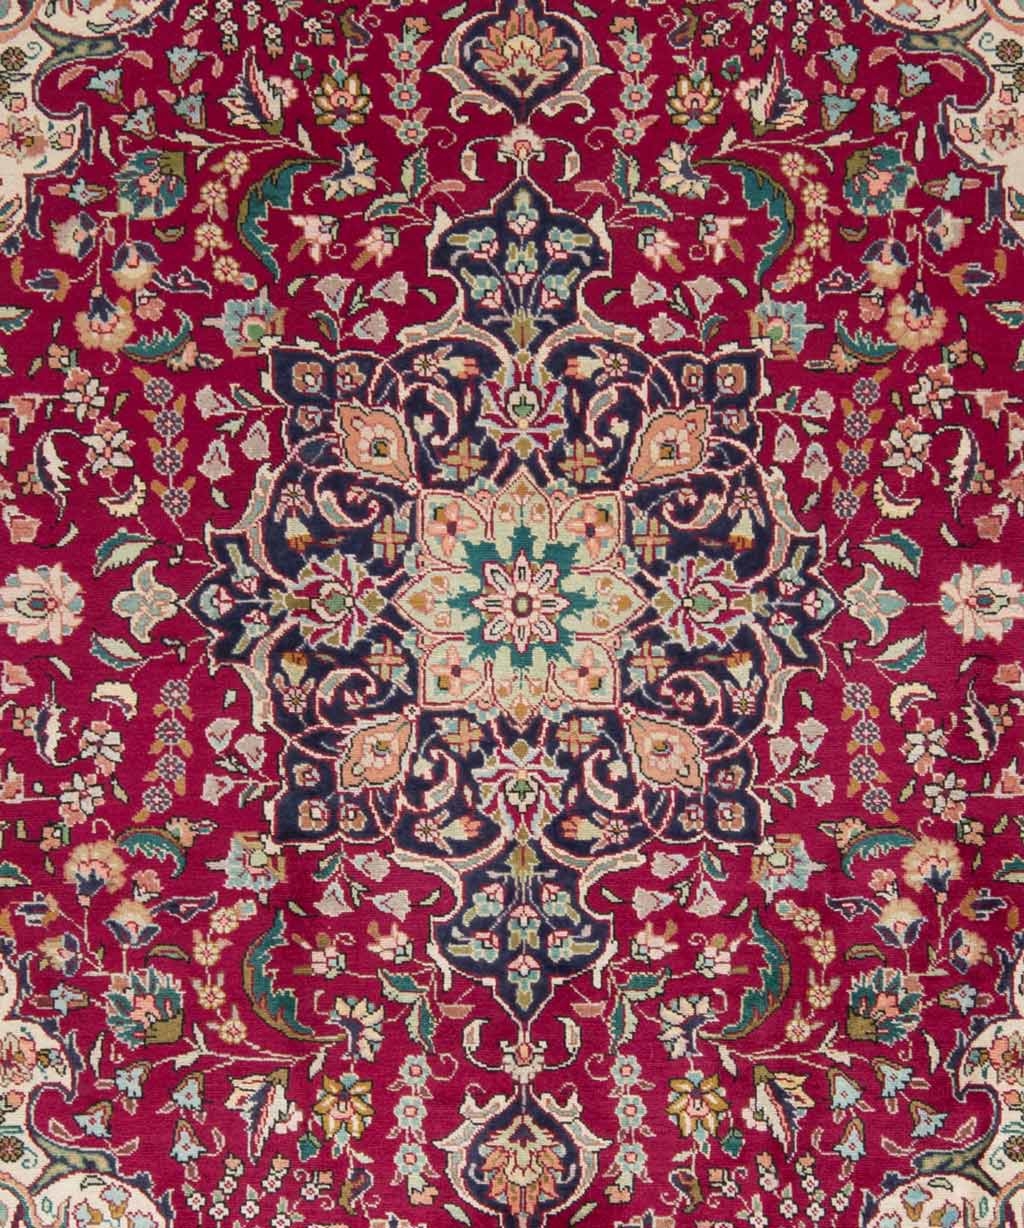 Tabriz Persian Rug